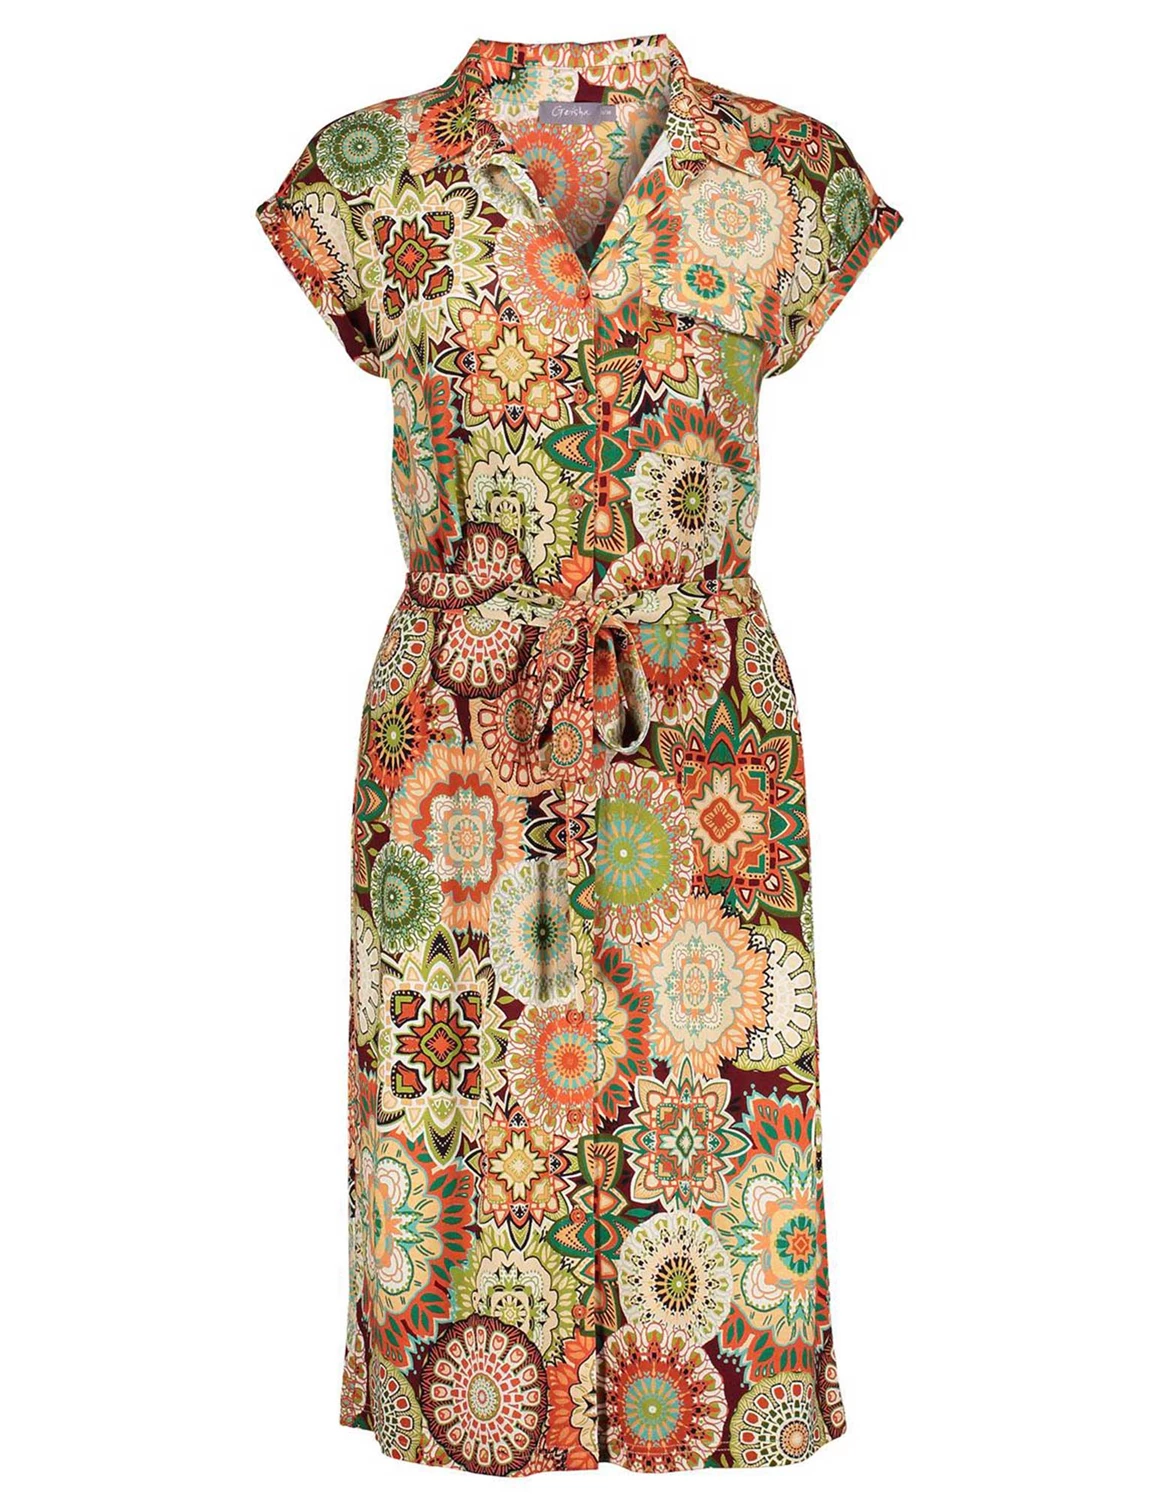 Woord Rafflesia Arnoldi schattig Geisha Dress 37471-20 multi colour kopen bij The Stone